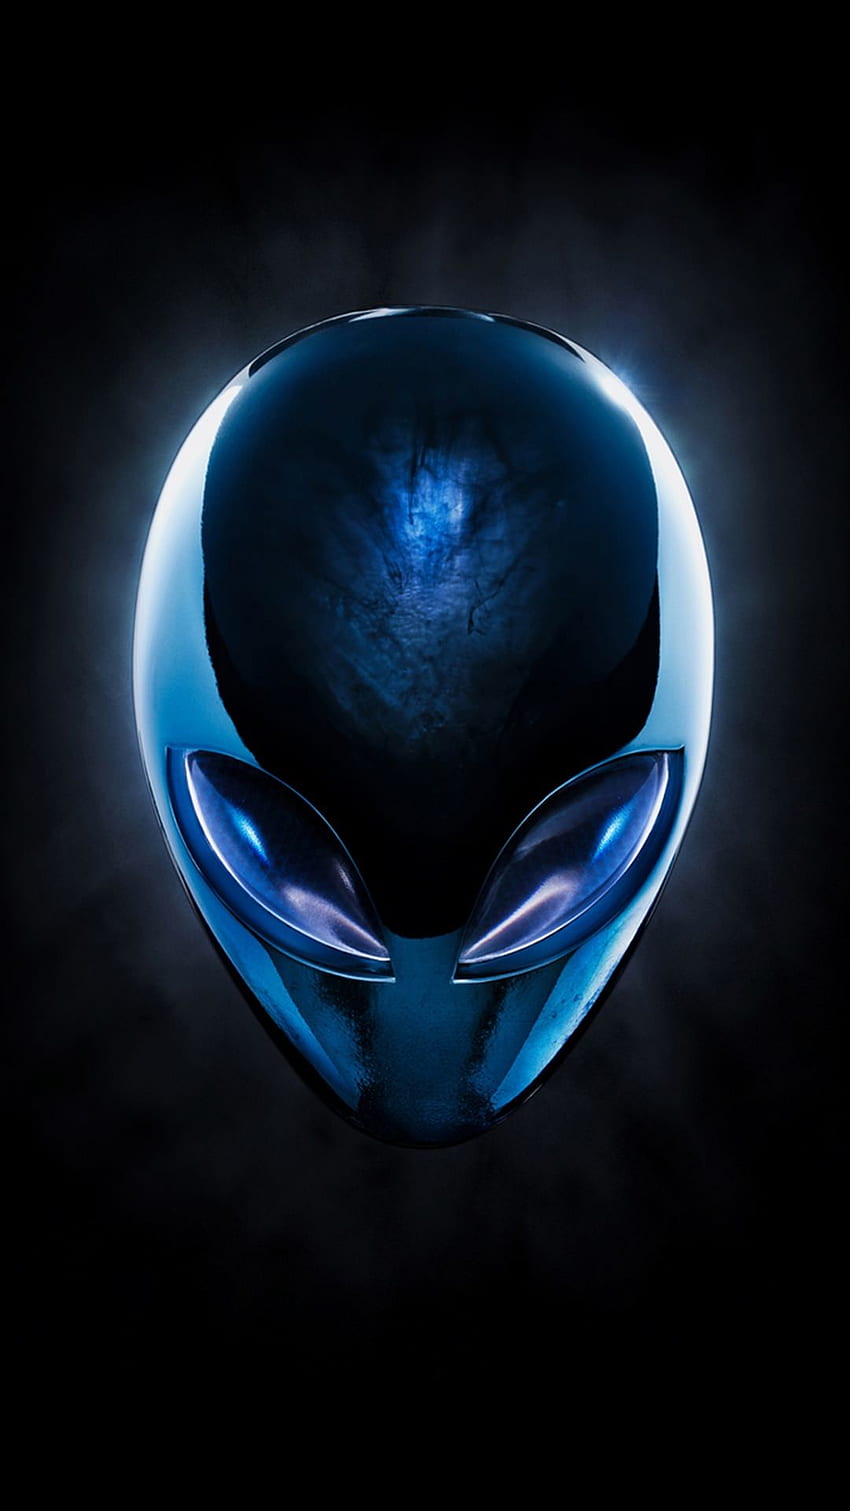 Genial Gris Negro Azul Android Smartphone - Alienware Skull iPhone fondo de pantalla del teléfono